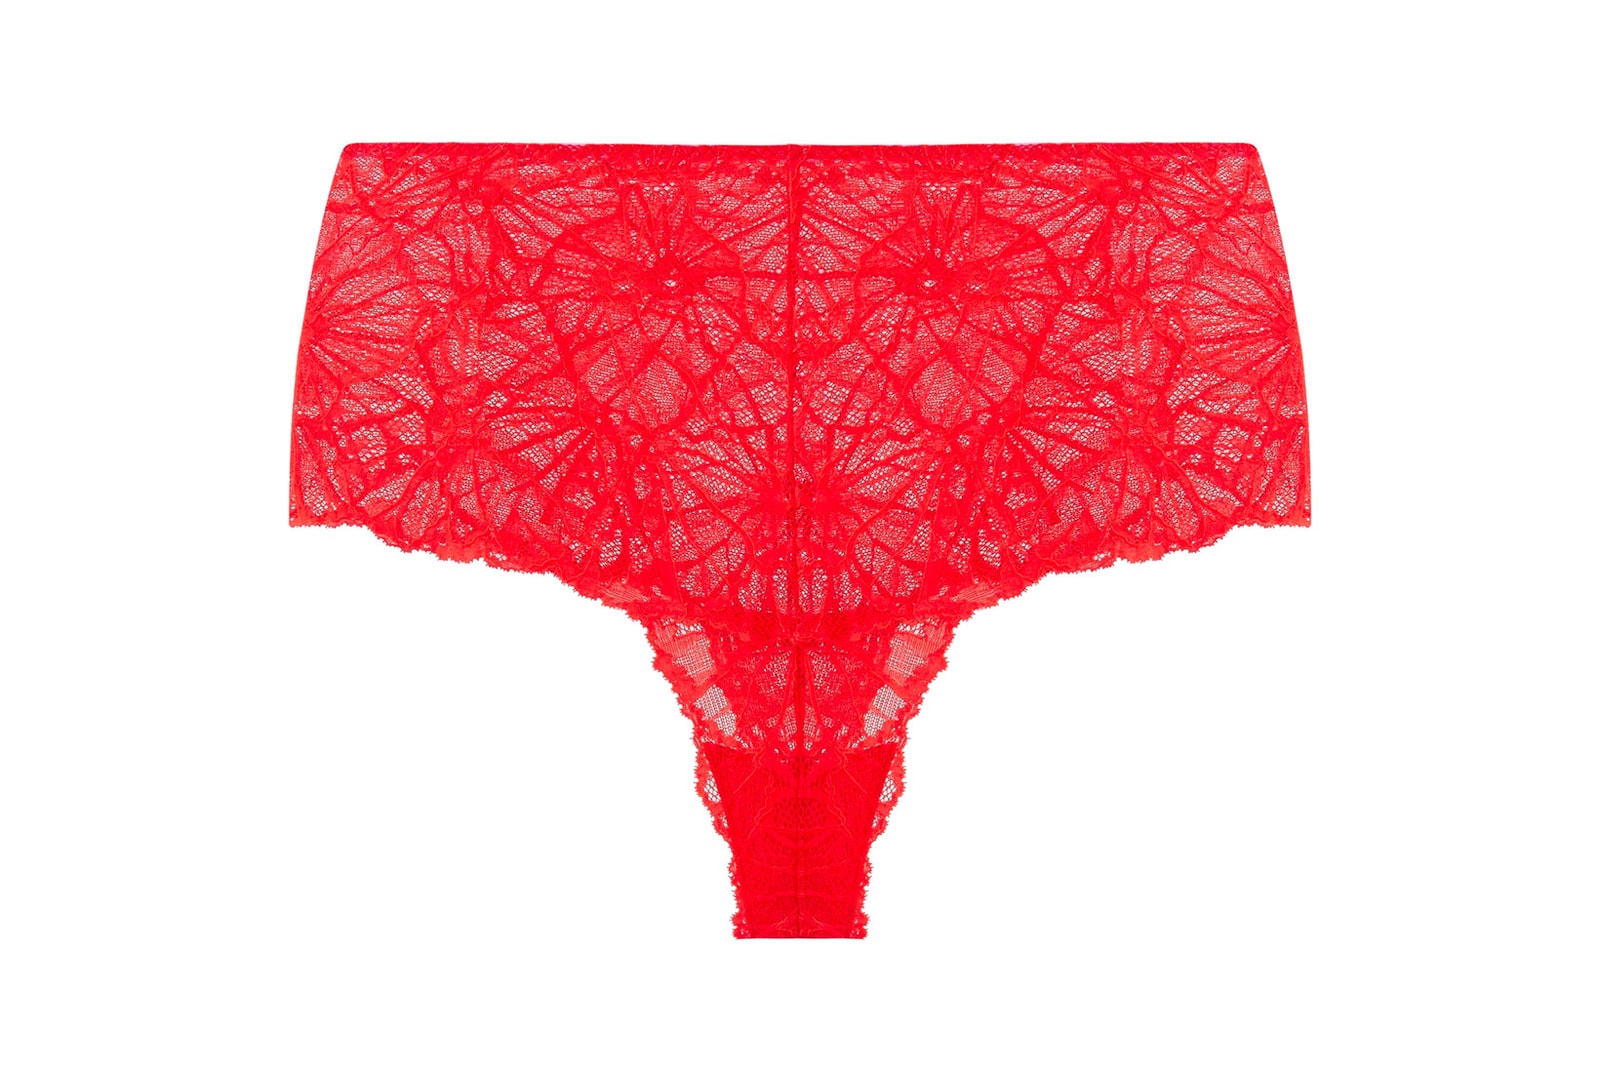 savage x fenty rihanna agent provocateur lingerie bra underwear stockings pink red